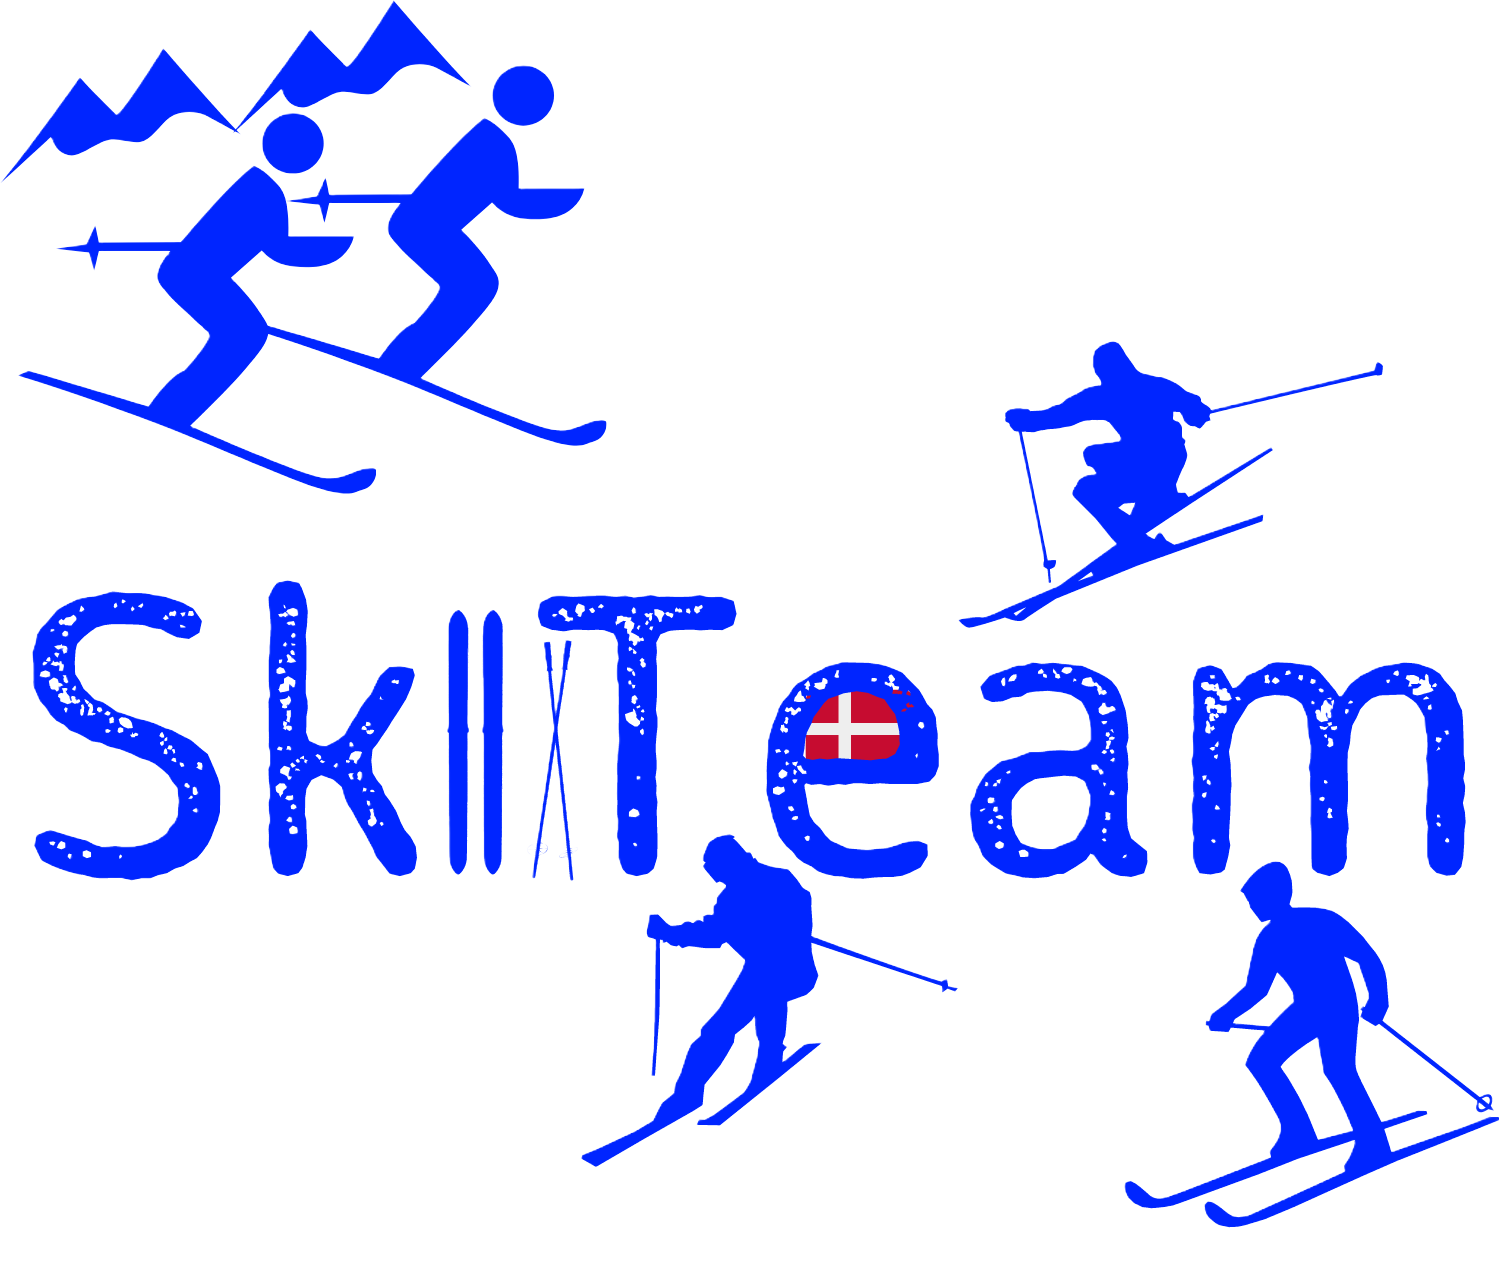 SkiTeam logo